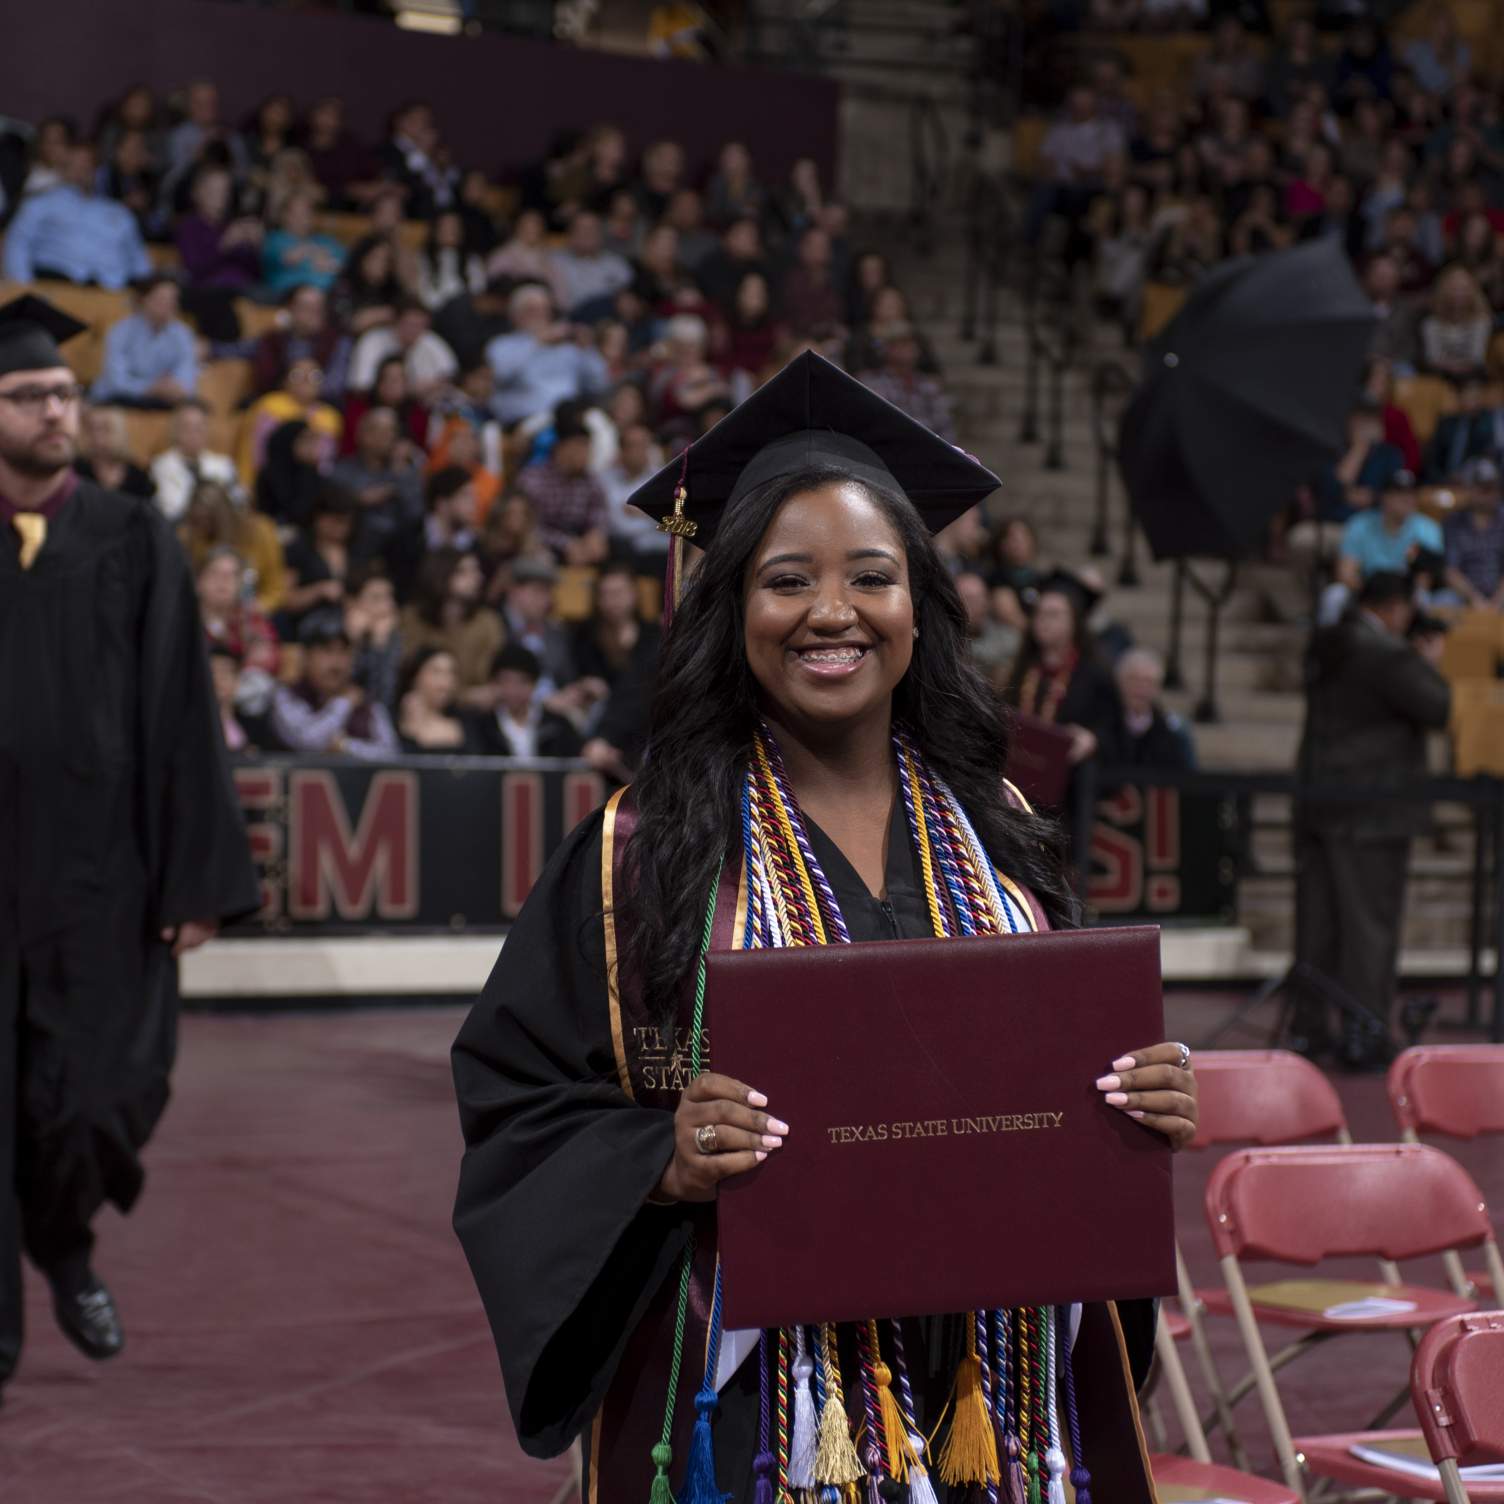 graduate smiling, holding diploma walking down aisle